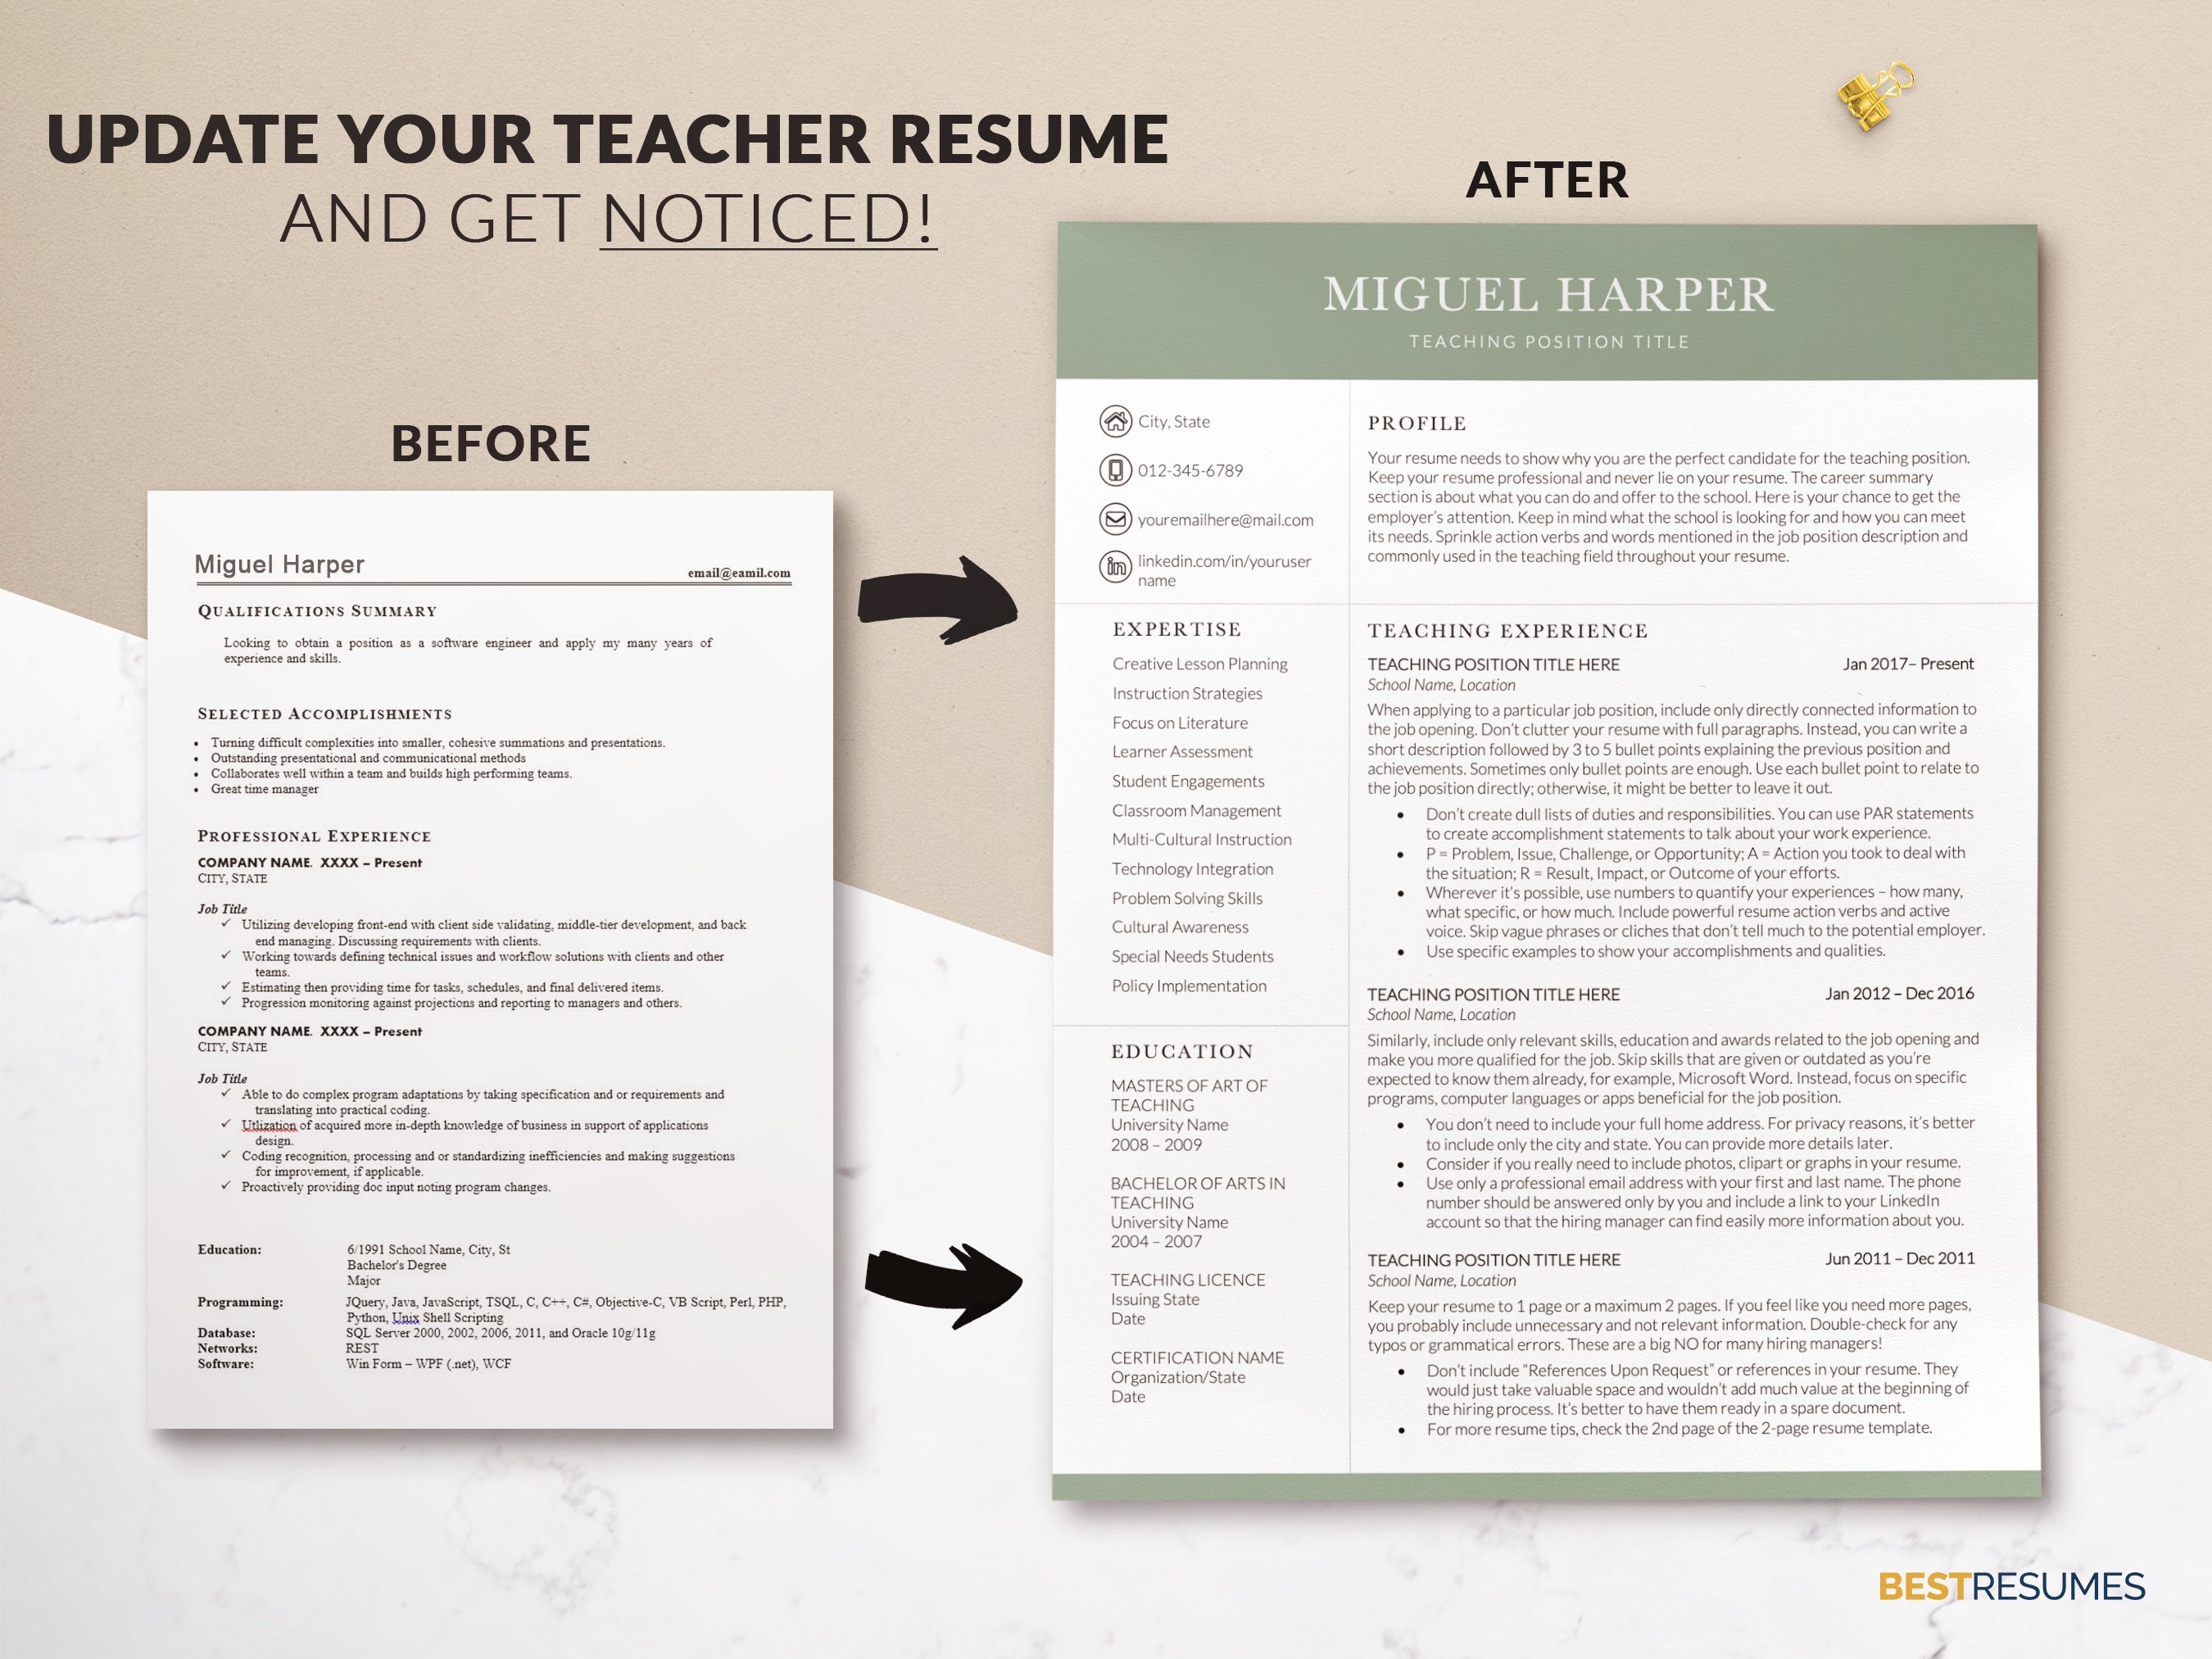 experienced teacher resume template update your teacher resume miguel harper 202